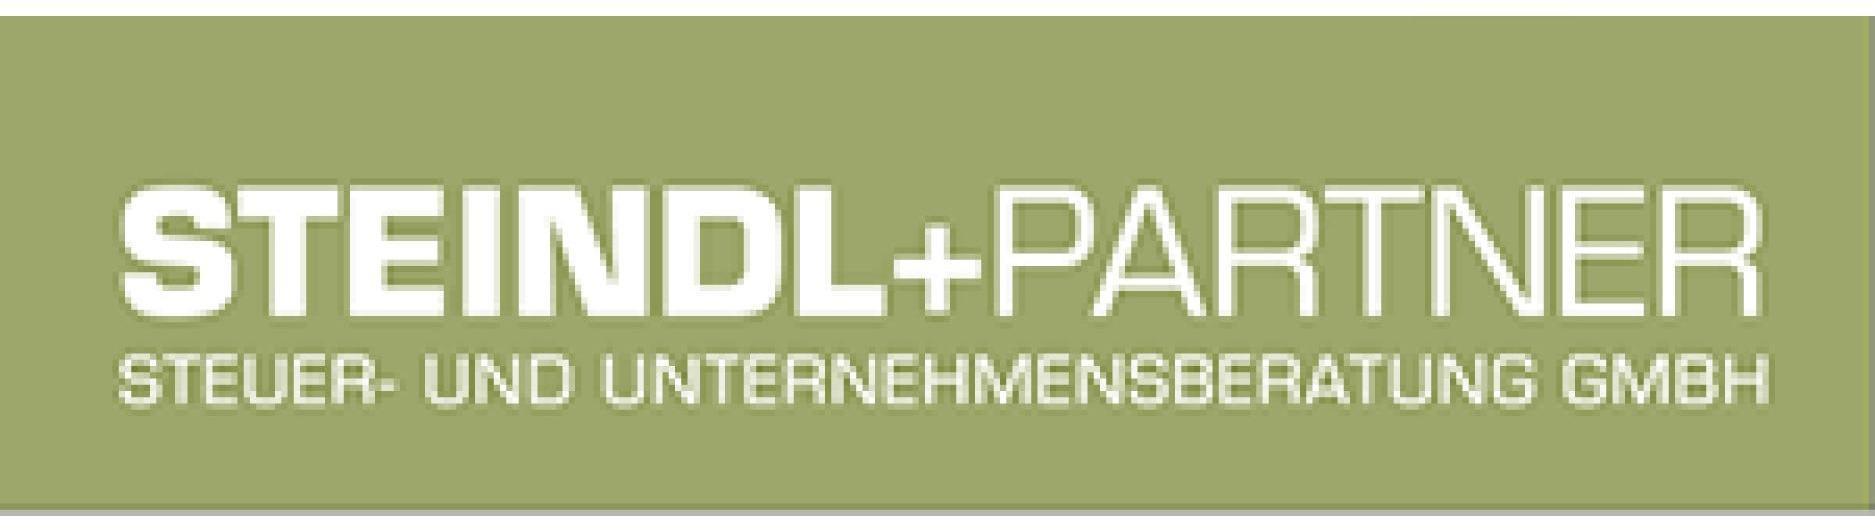 Logo STEINDL Steuerberatung GmbH